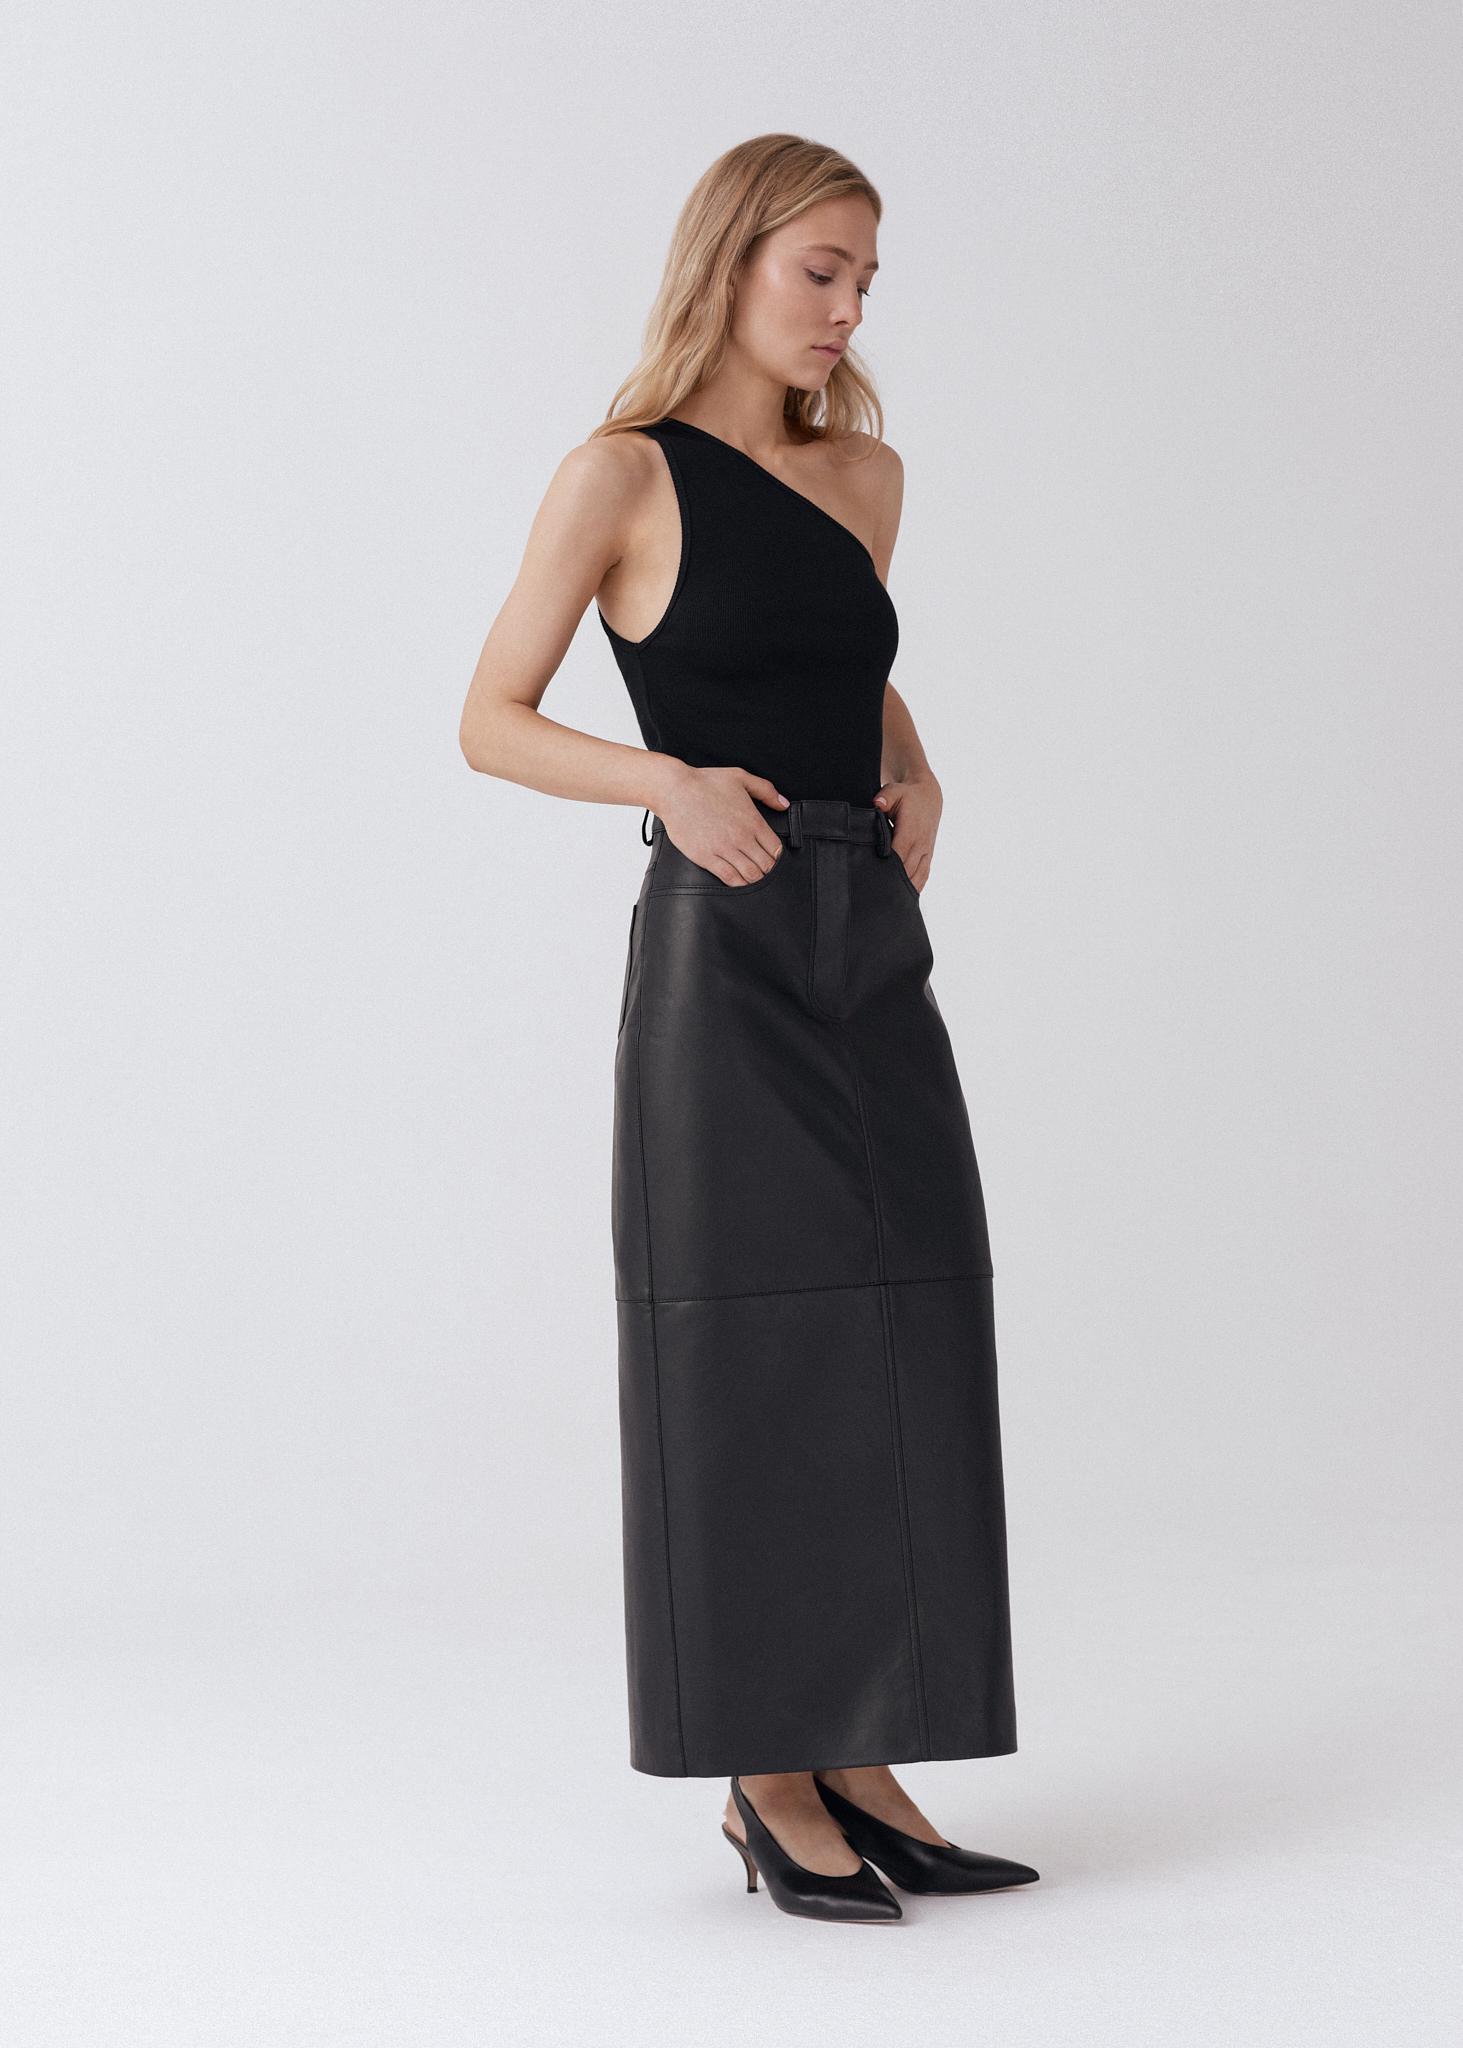 Filippa K Leather Skirt - Midi skirts - Boozt.com